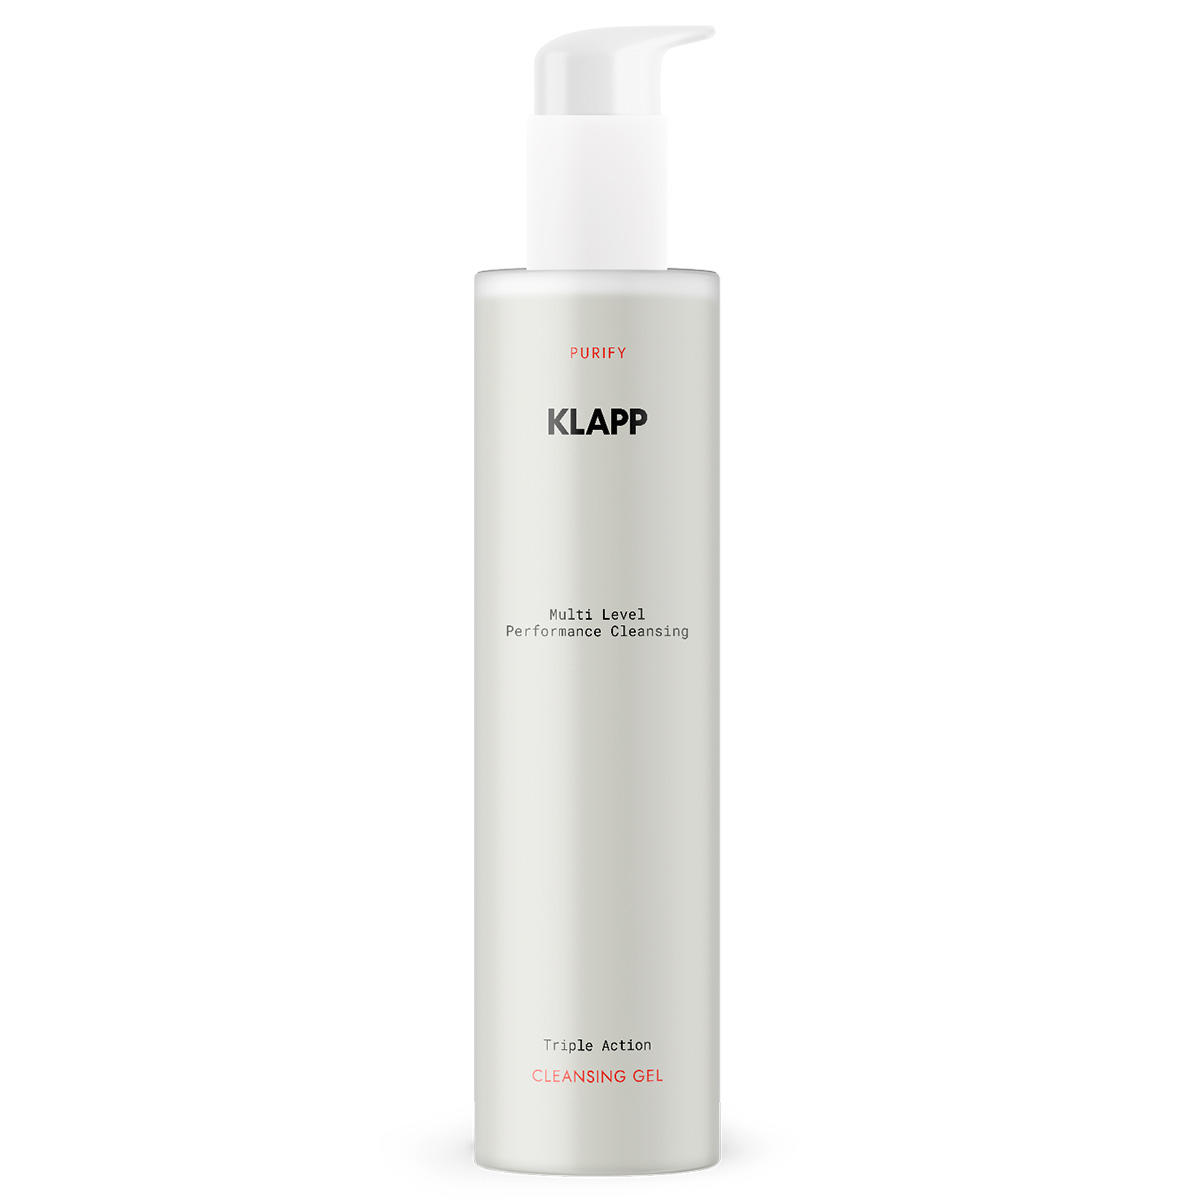 KLAPP Multi Level Performance Cleansing Triple Action CLEANSING GEL 200 ml - 1